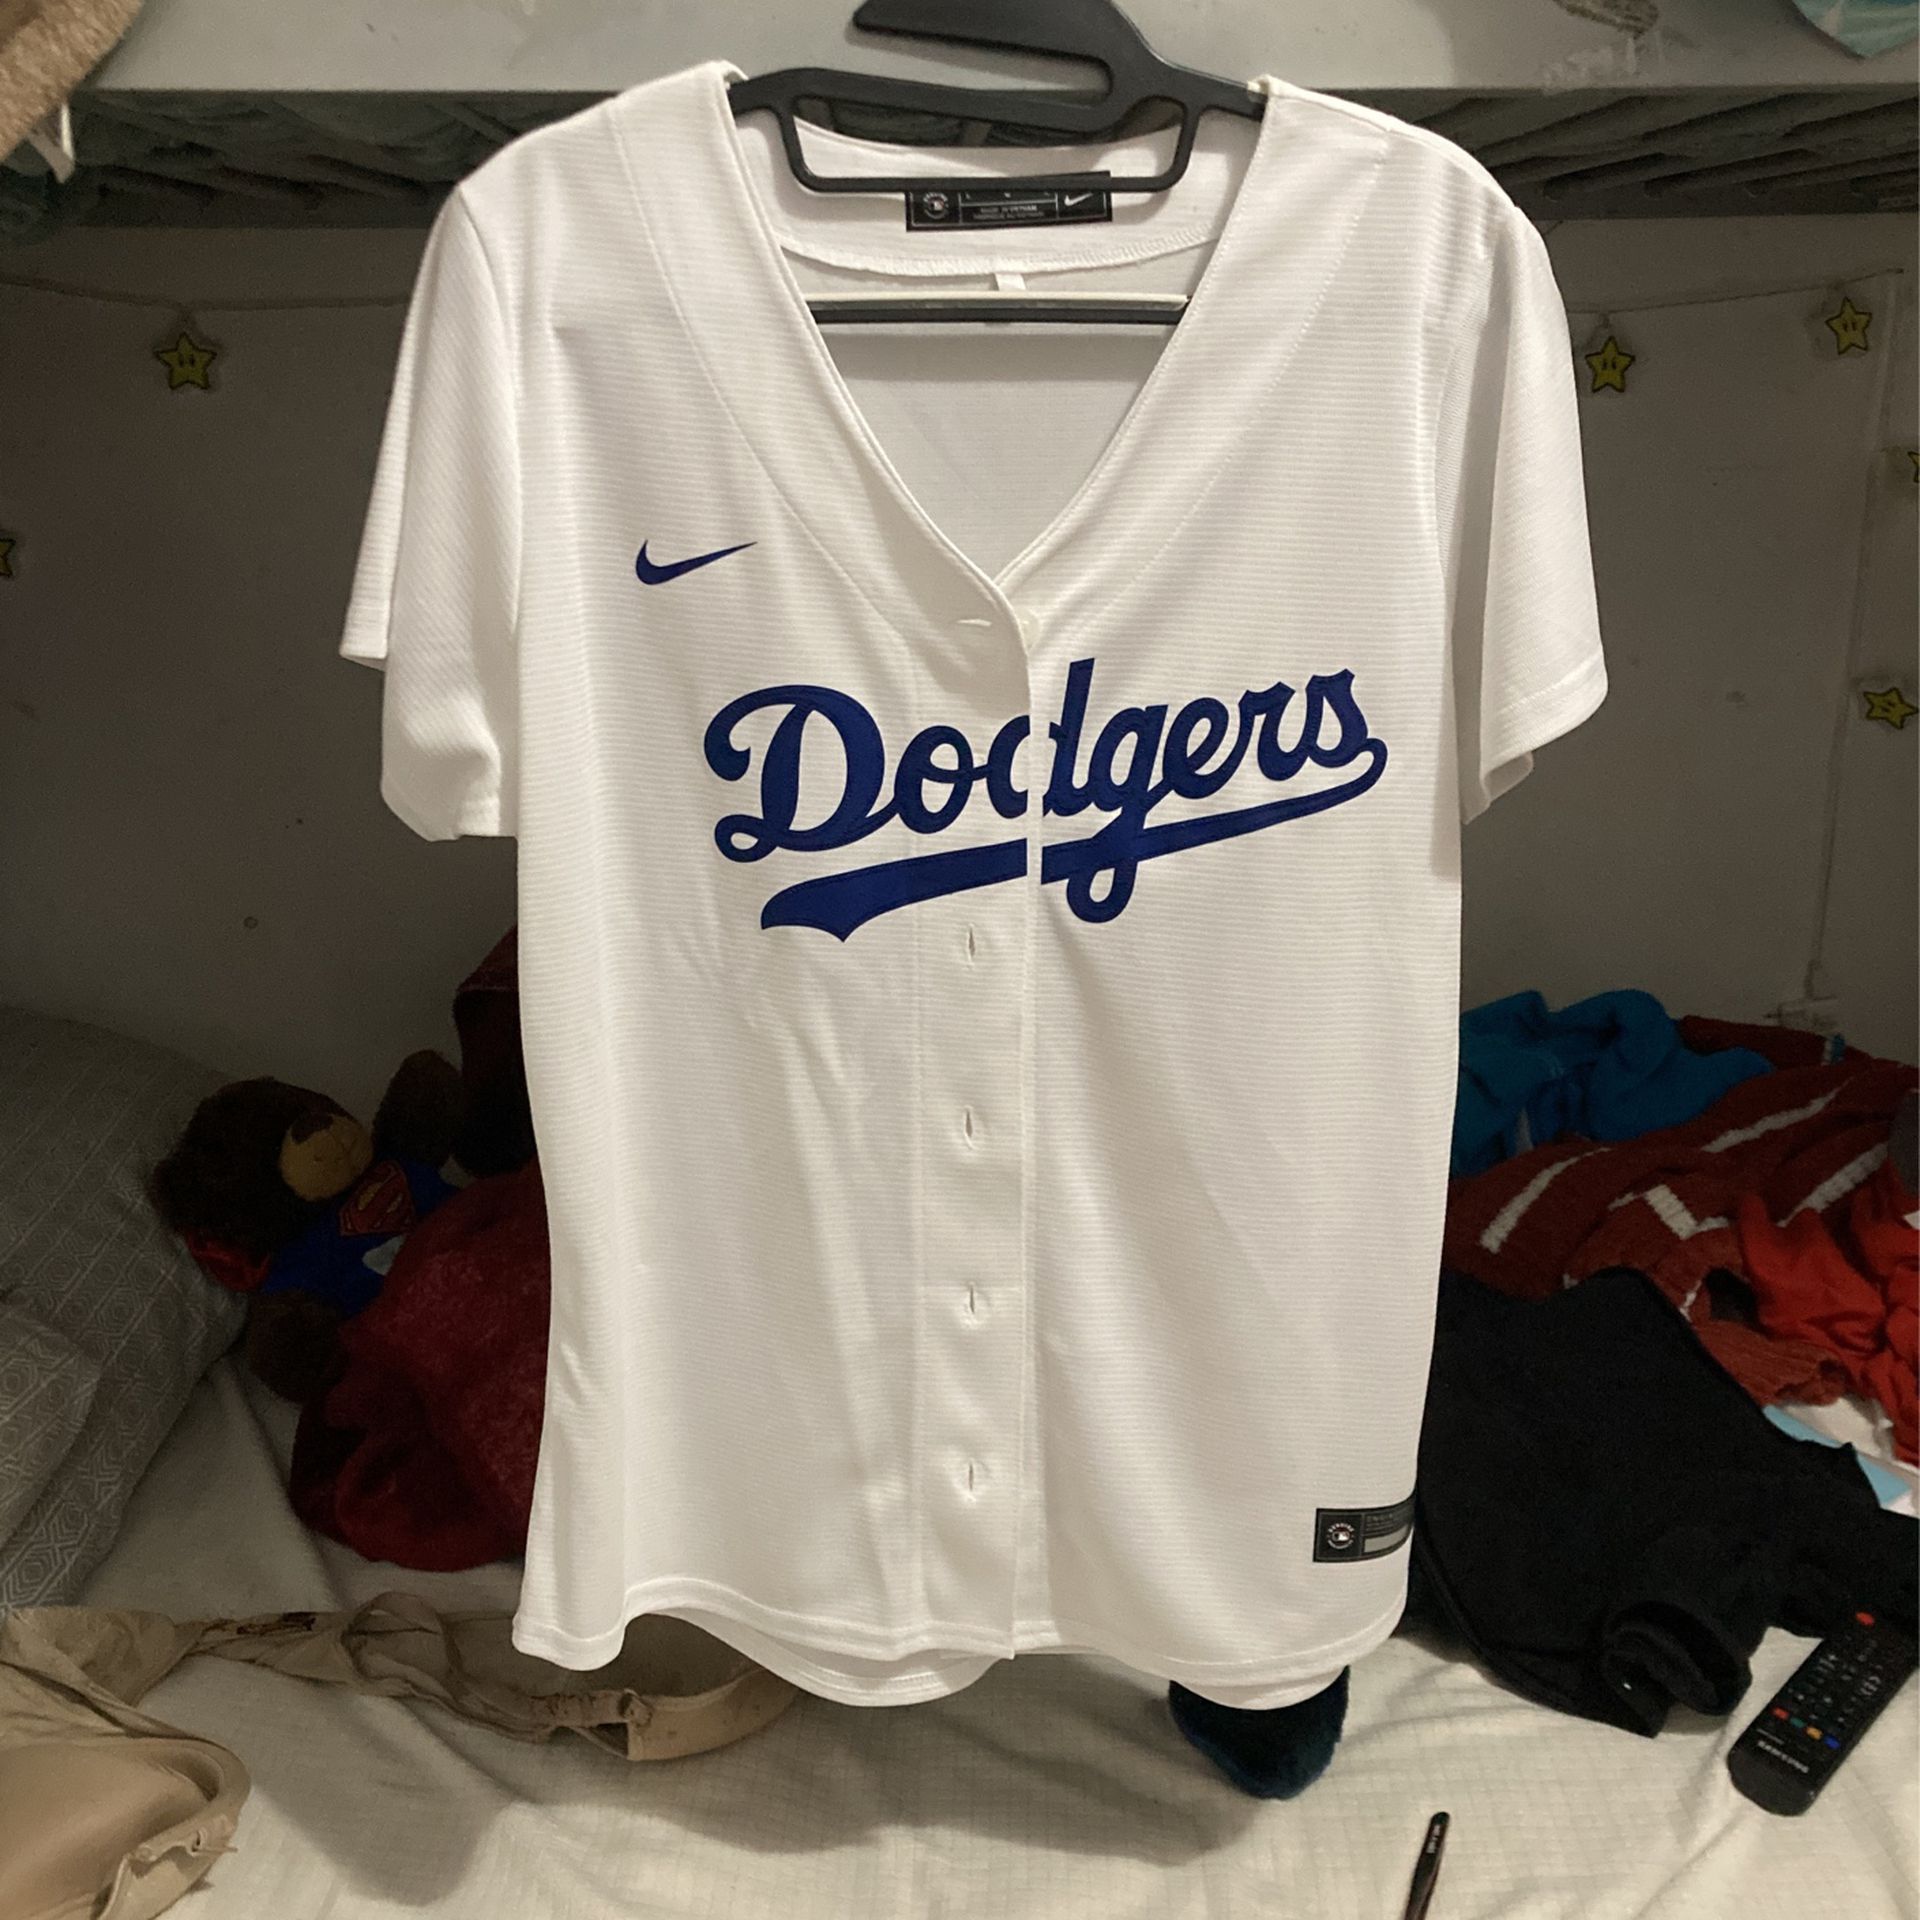 Womens Dodgers Jersey for Sale in Oxnard, CA - OfferUp